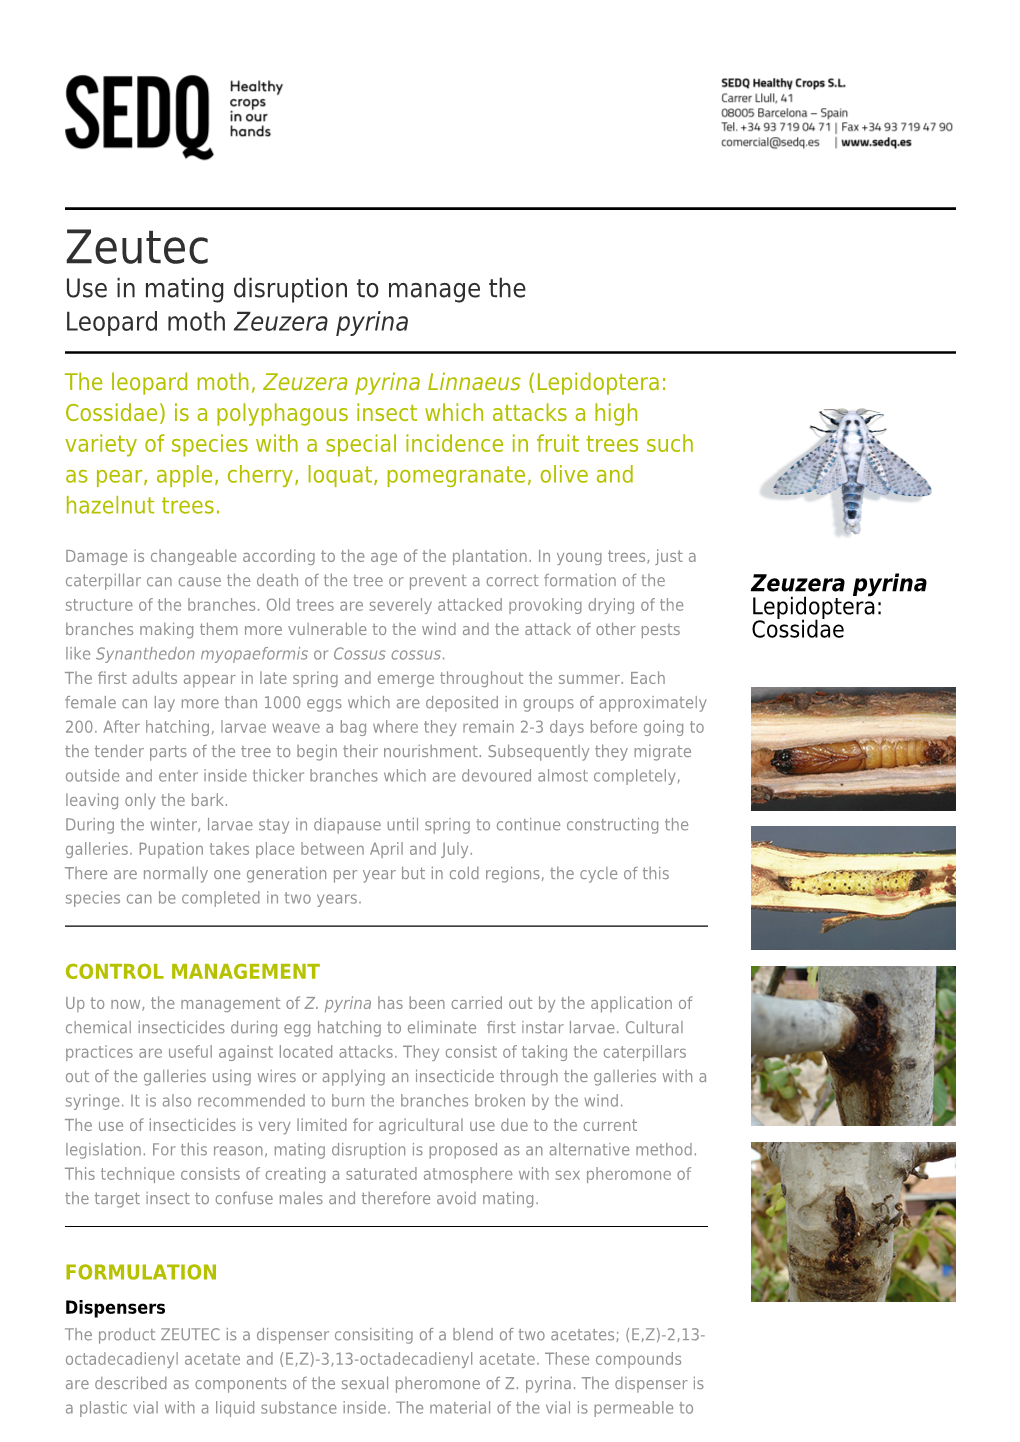 Zeutec Use in Mating Disruption to Manage the Leopard Moth Zeuzera Pyrina